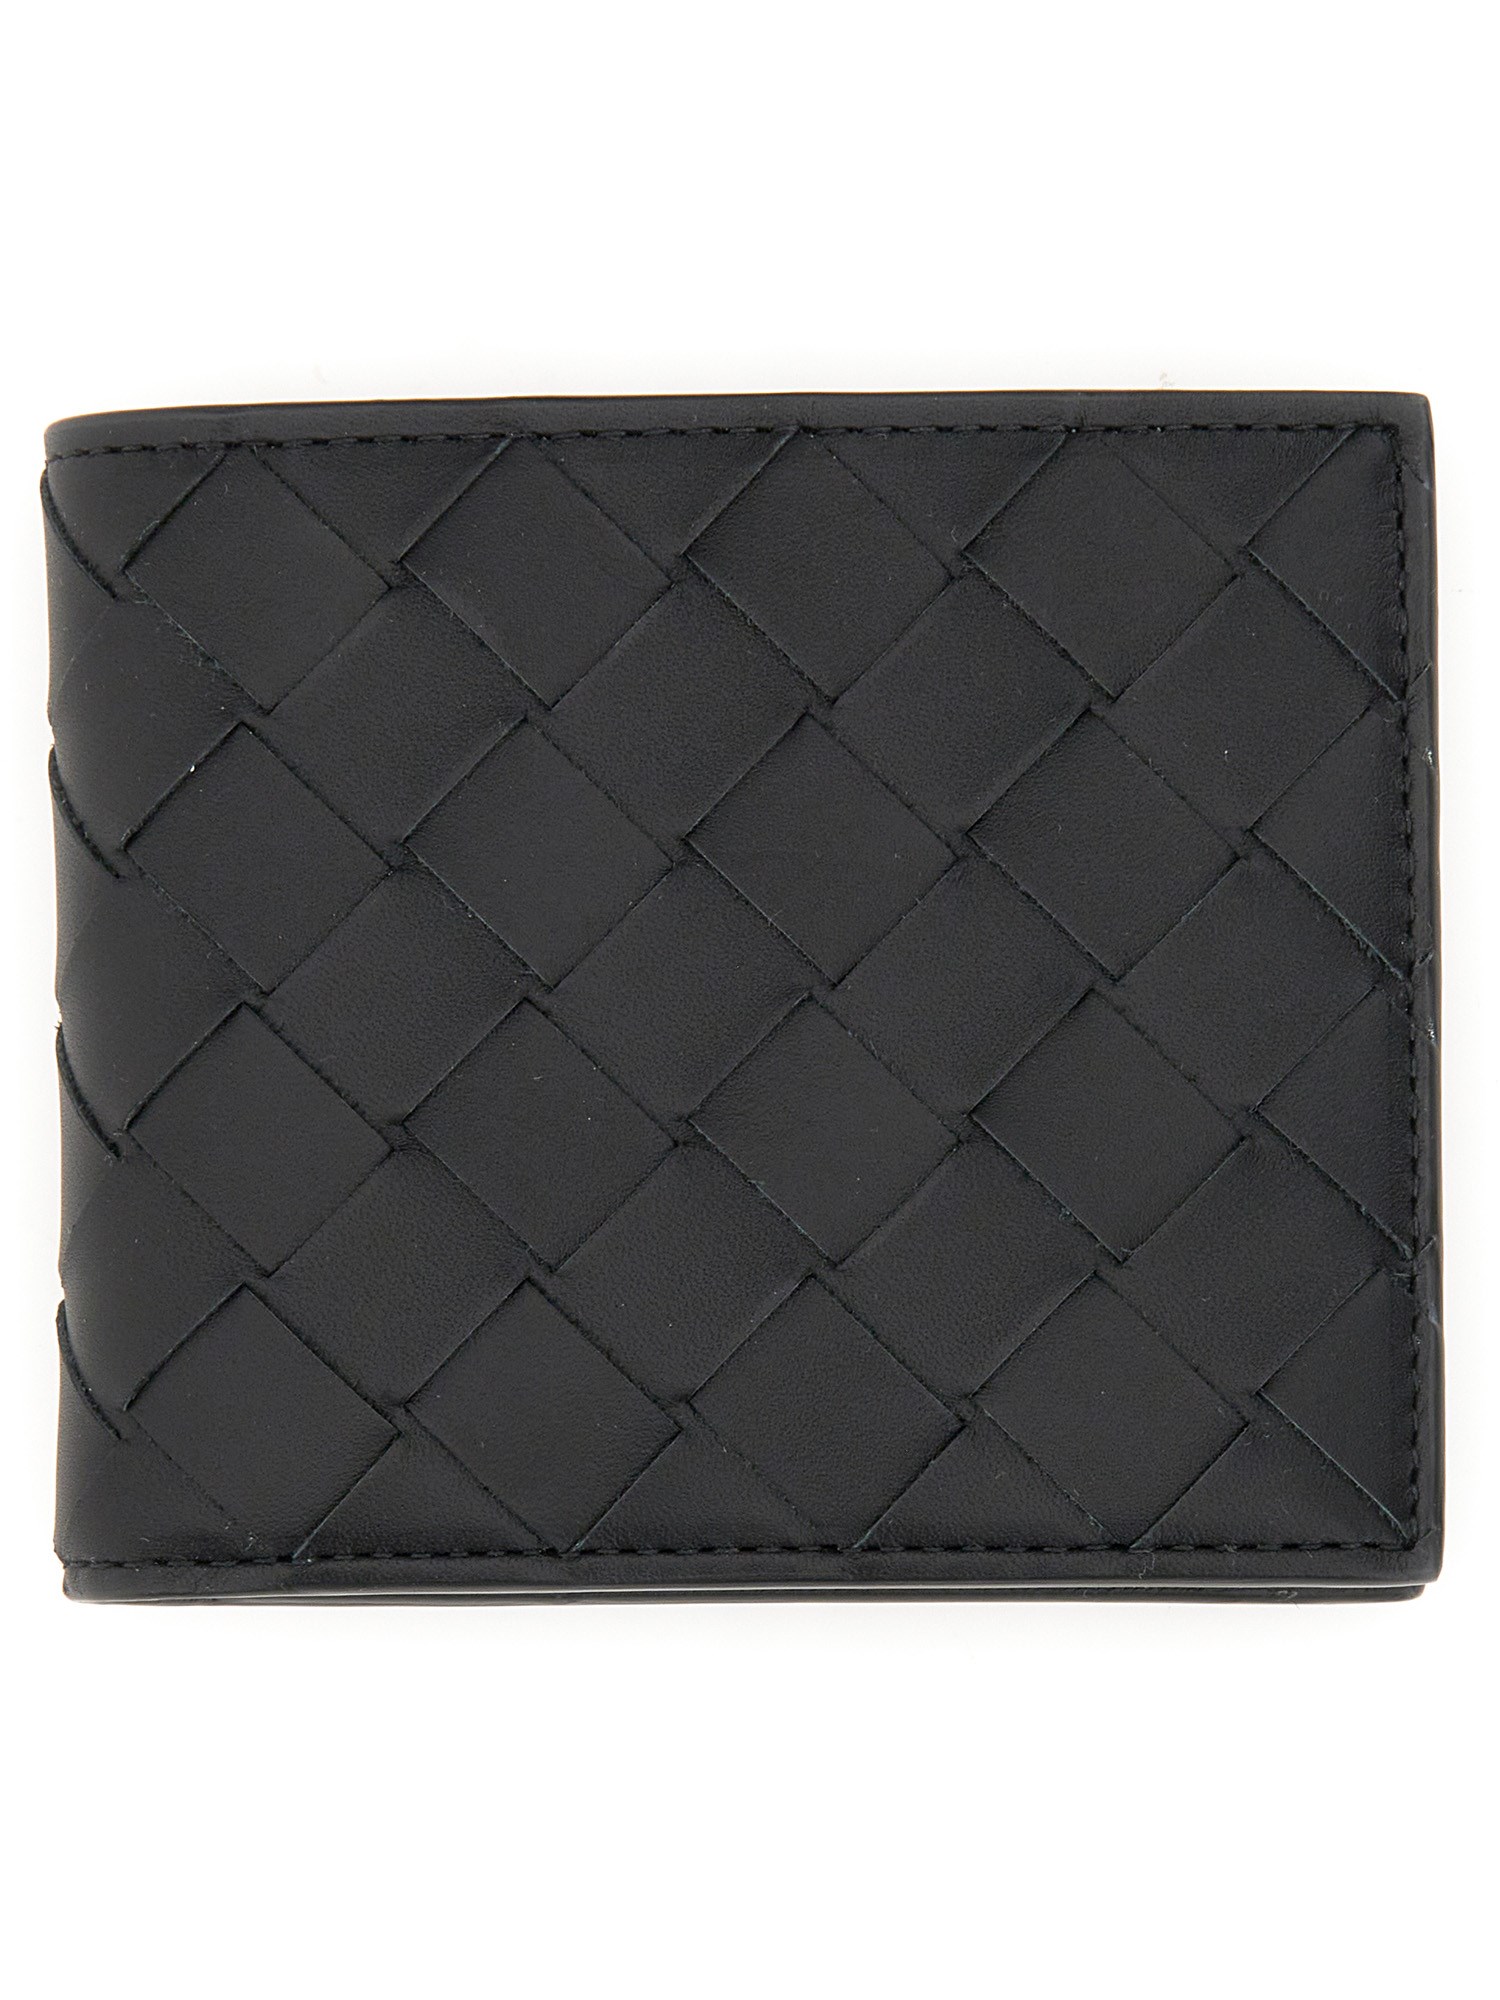 bottega veneta bi-fold leather wallet